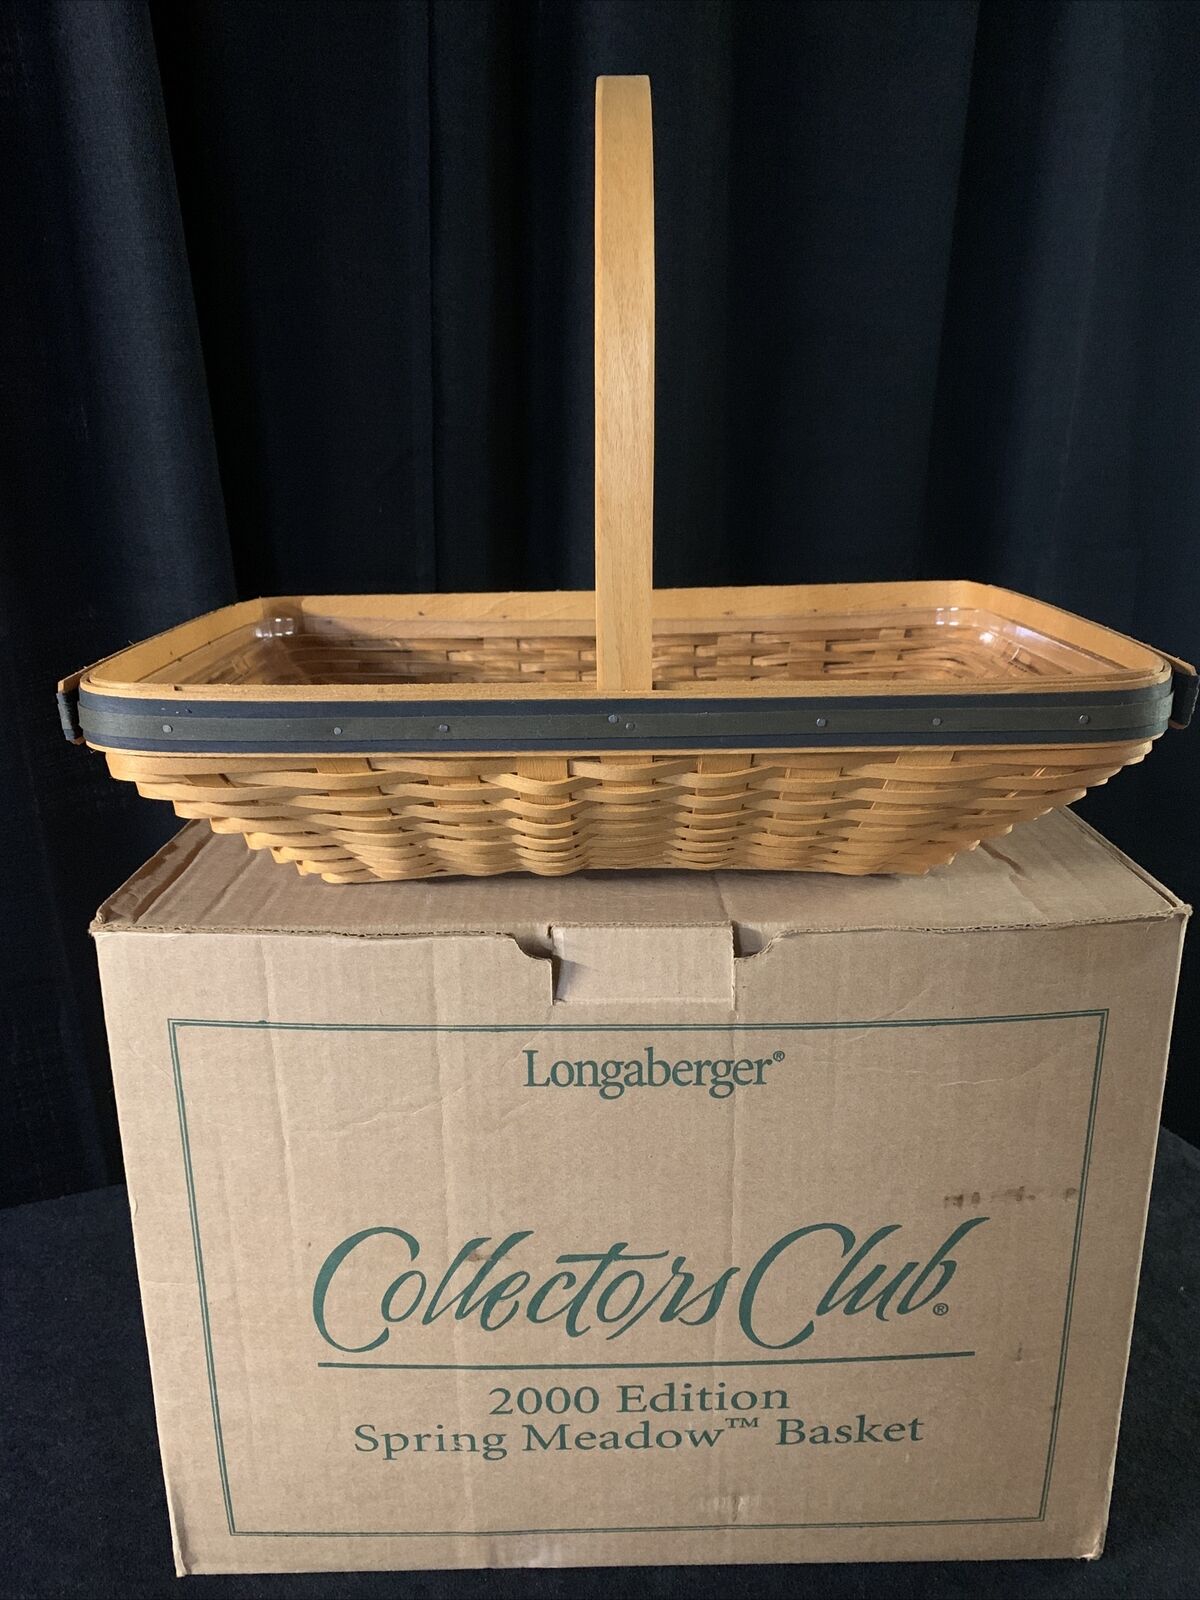 Longaberger Collectors Club 2000 Spring Meadow Basket, Liner & Box. Rare